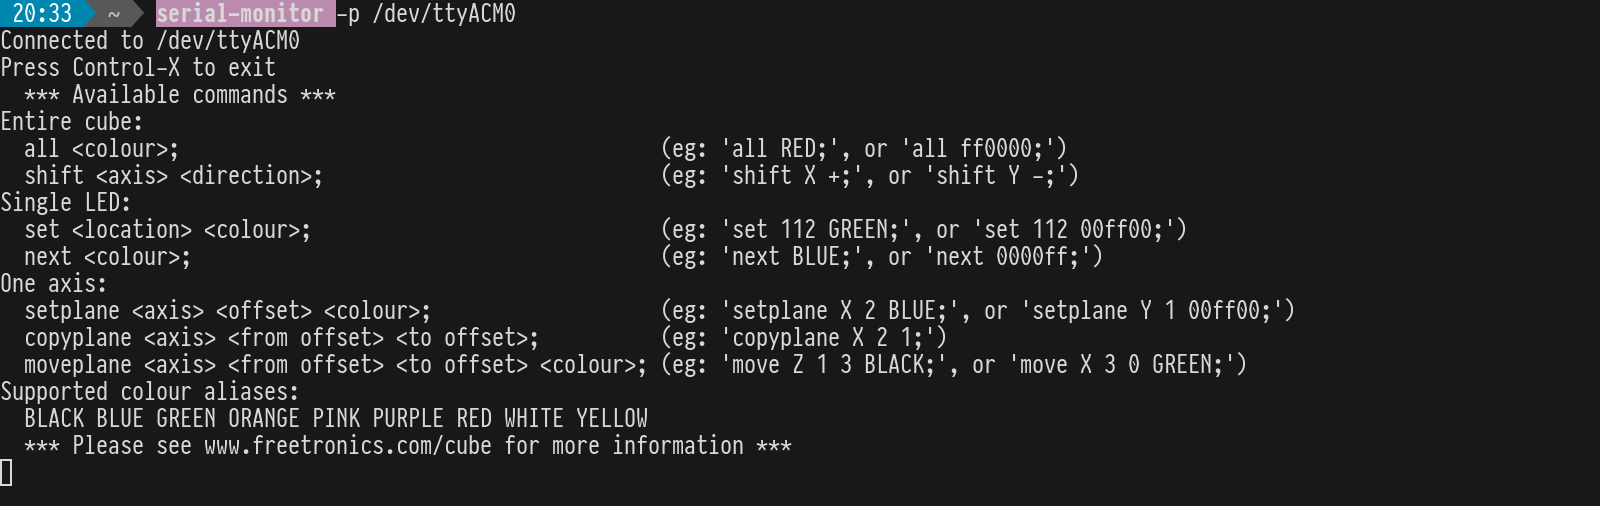 Screenshot of serial-monitor running in a terminal.